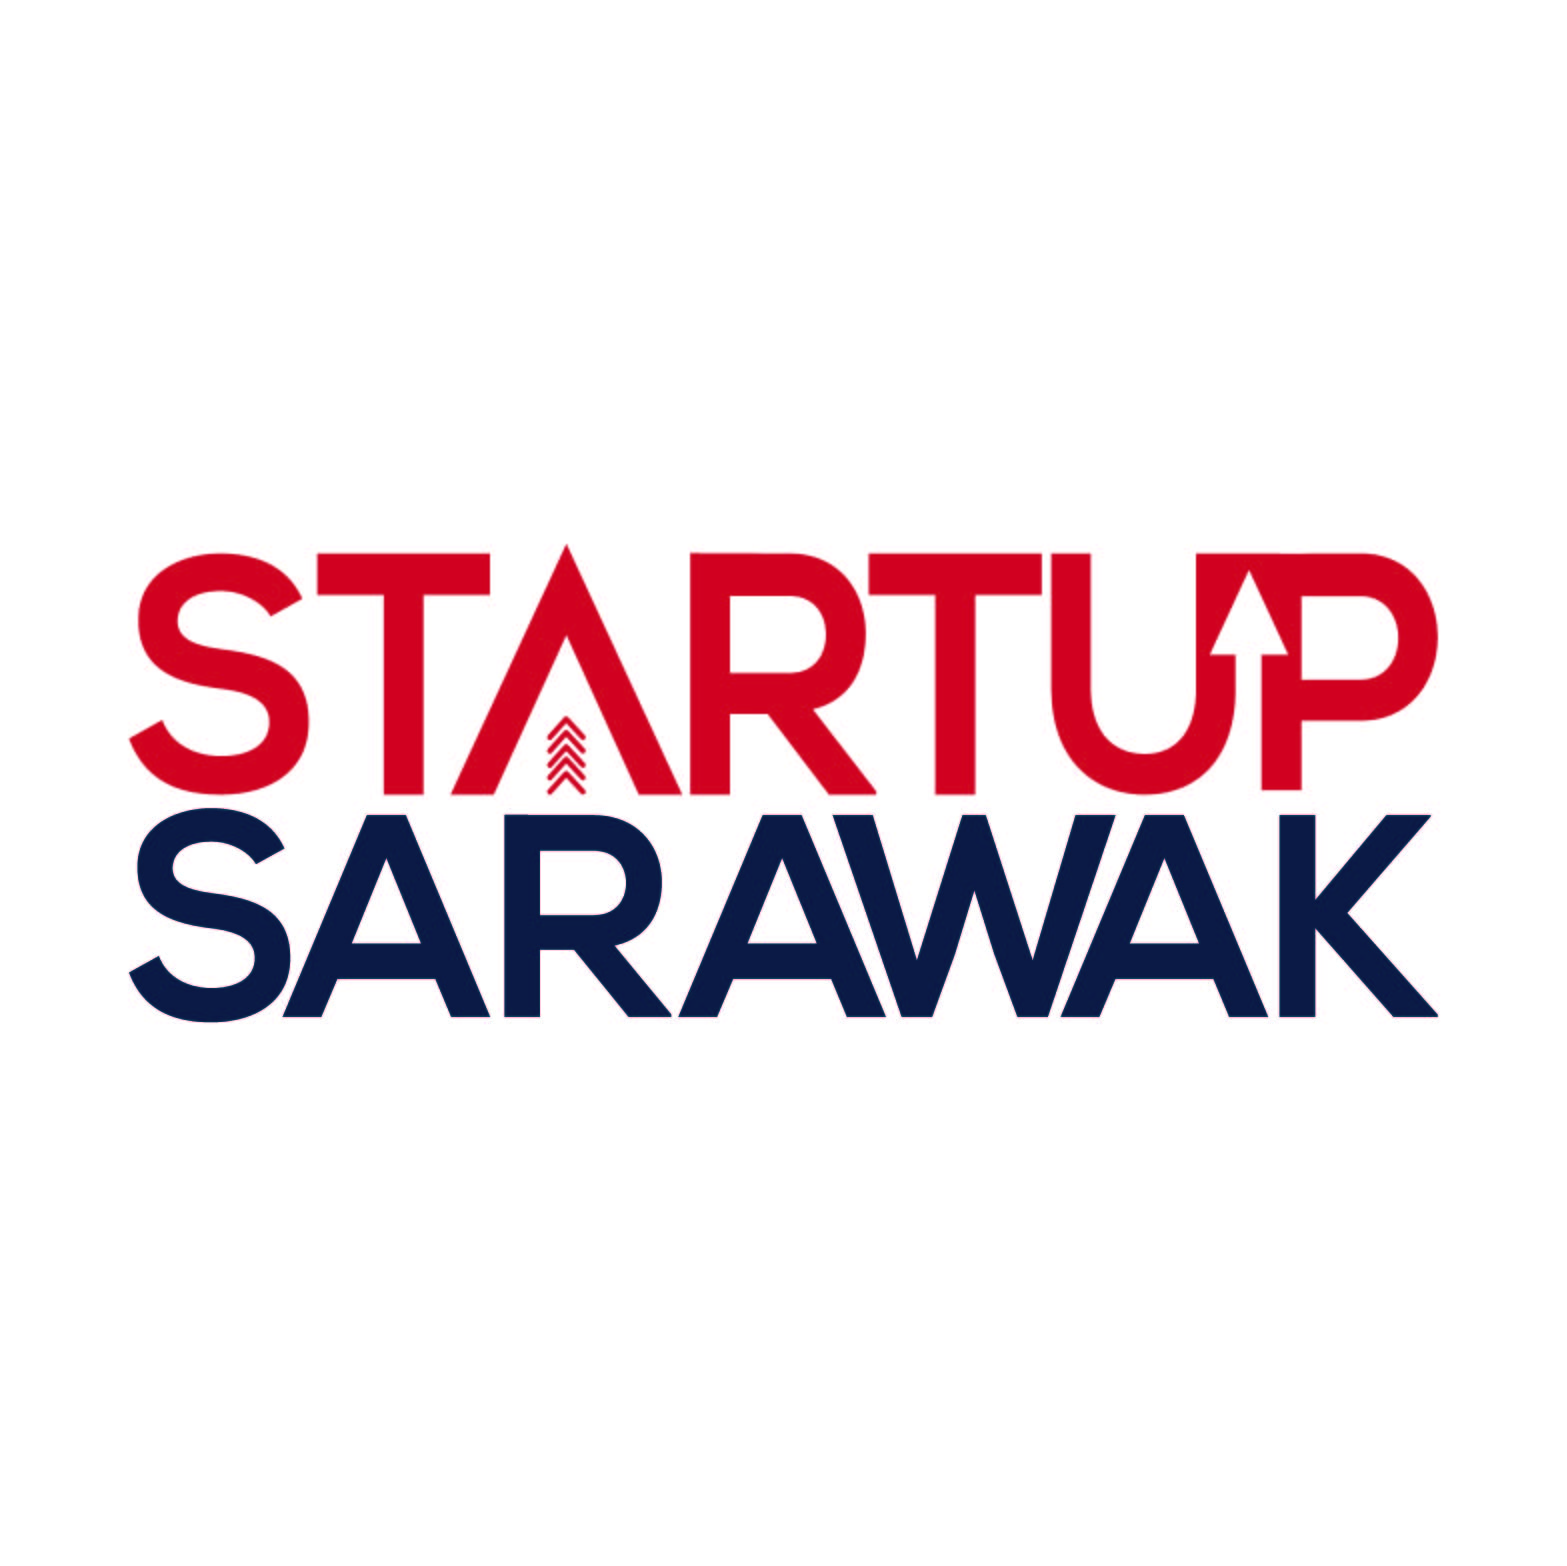 Sarawak media network